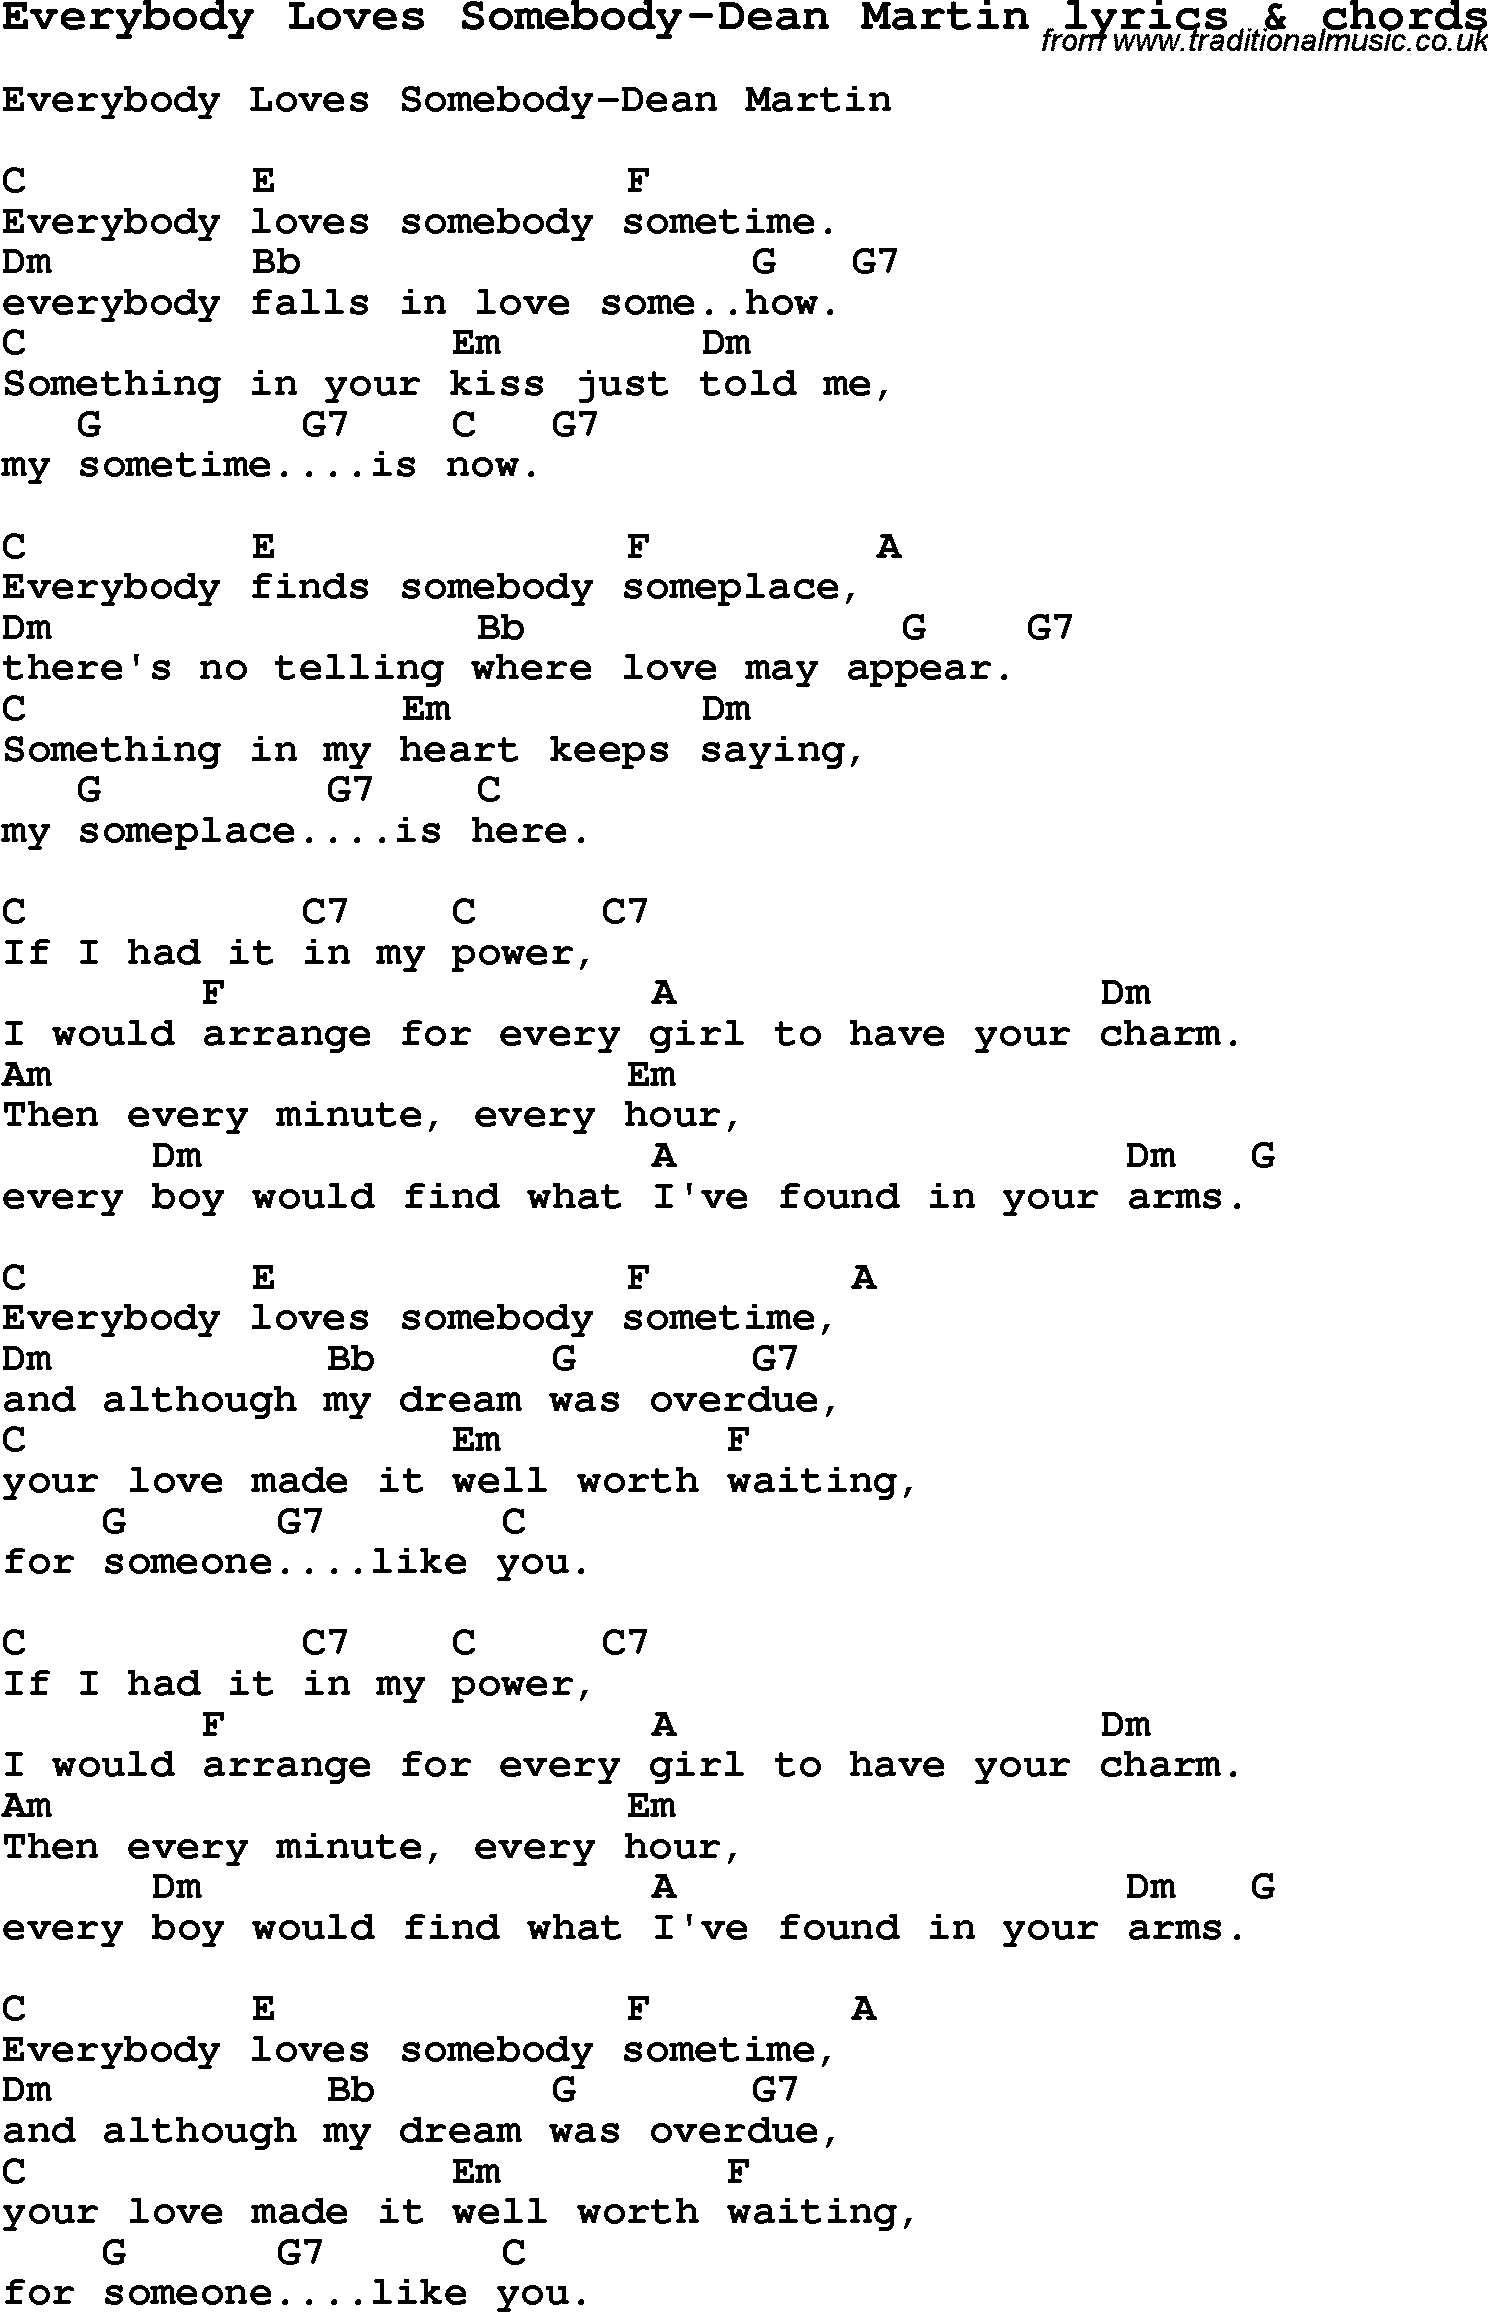 Love Song Lyrics for: Everybody Loves Somebody-Dean Martin with chords for Ukulele, Guitar Banjo etc.